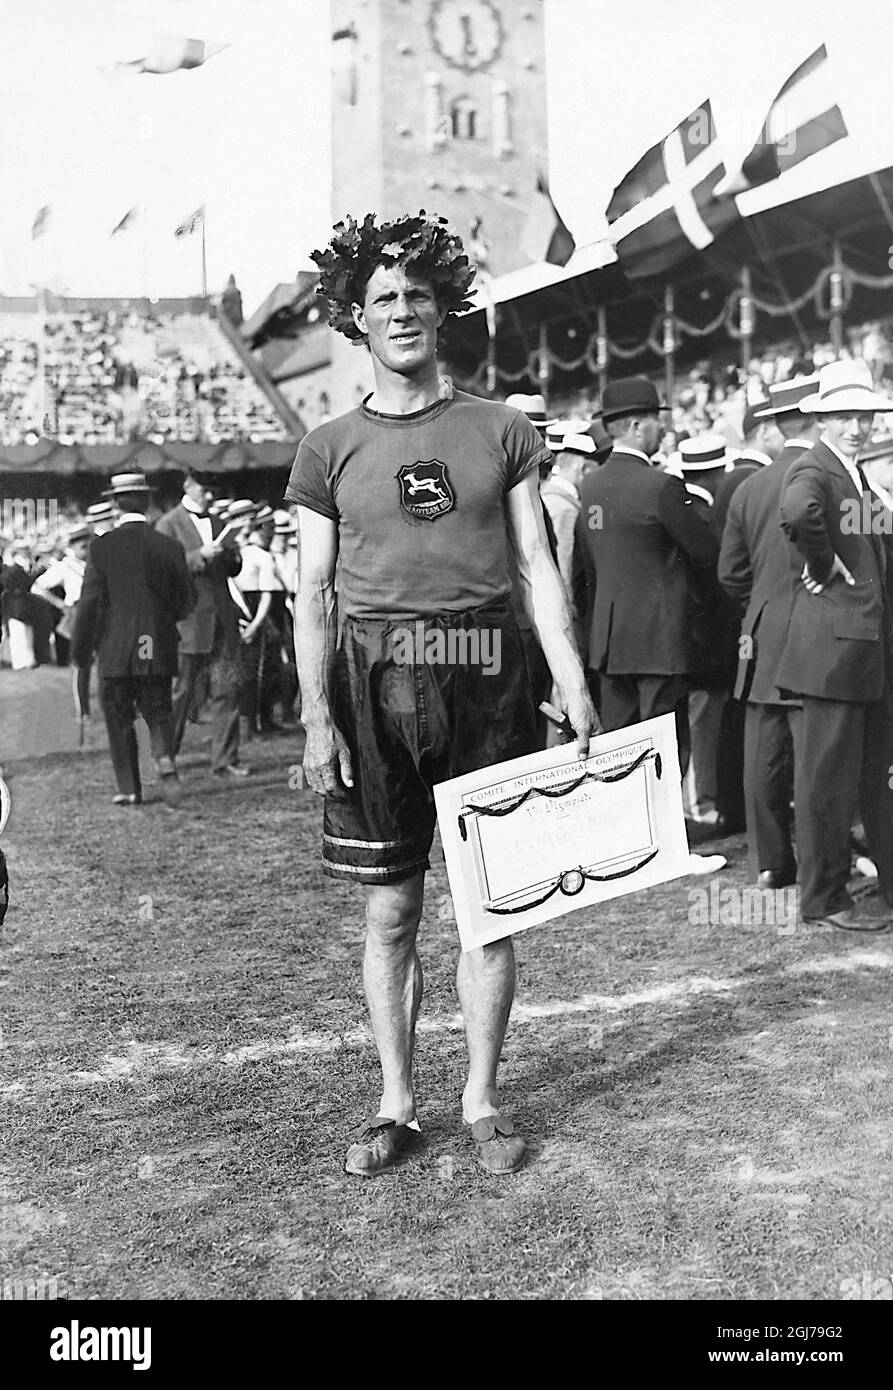 FILE 1912 Ken McArthur from South Afica won the marathon race, time 2.36.54,8 at the Olympics in Stockholm 1912. Foto:Scanpix Historical/ Kod:1900 Scanpix SWEDEN Stock Photo